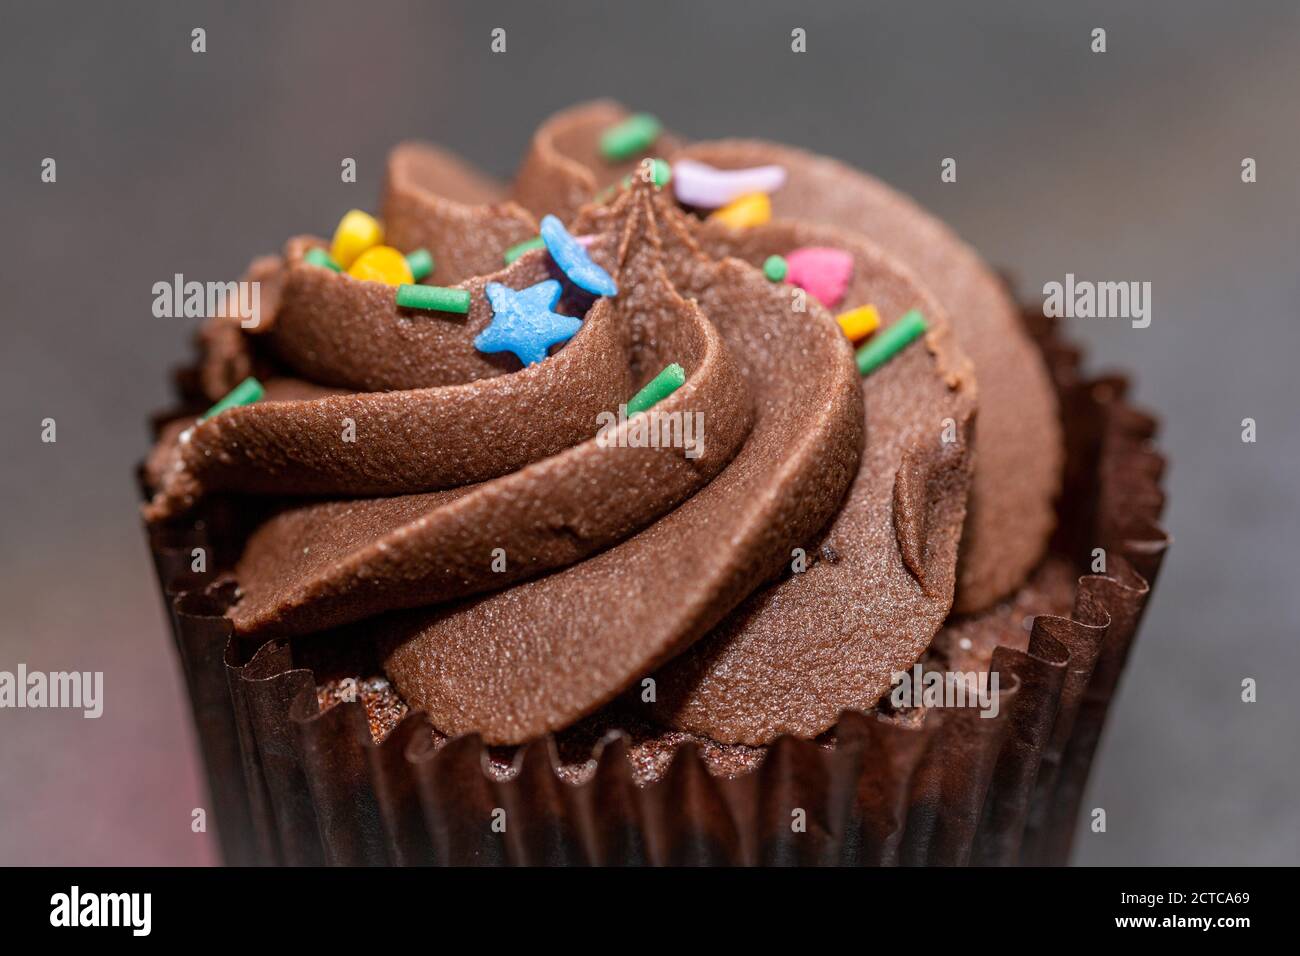 A close up of a chocolate cupcake using selective focus Stock Photo